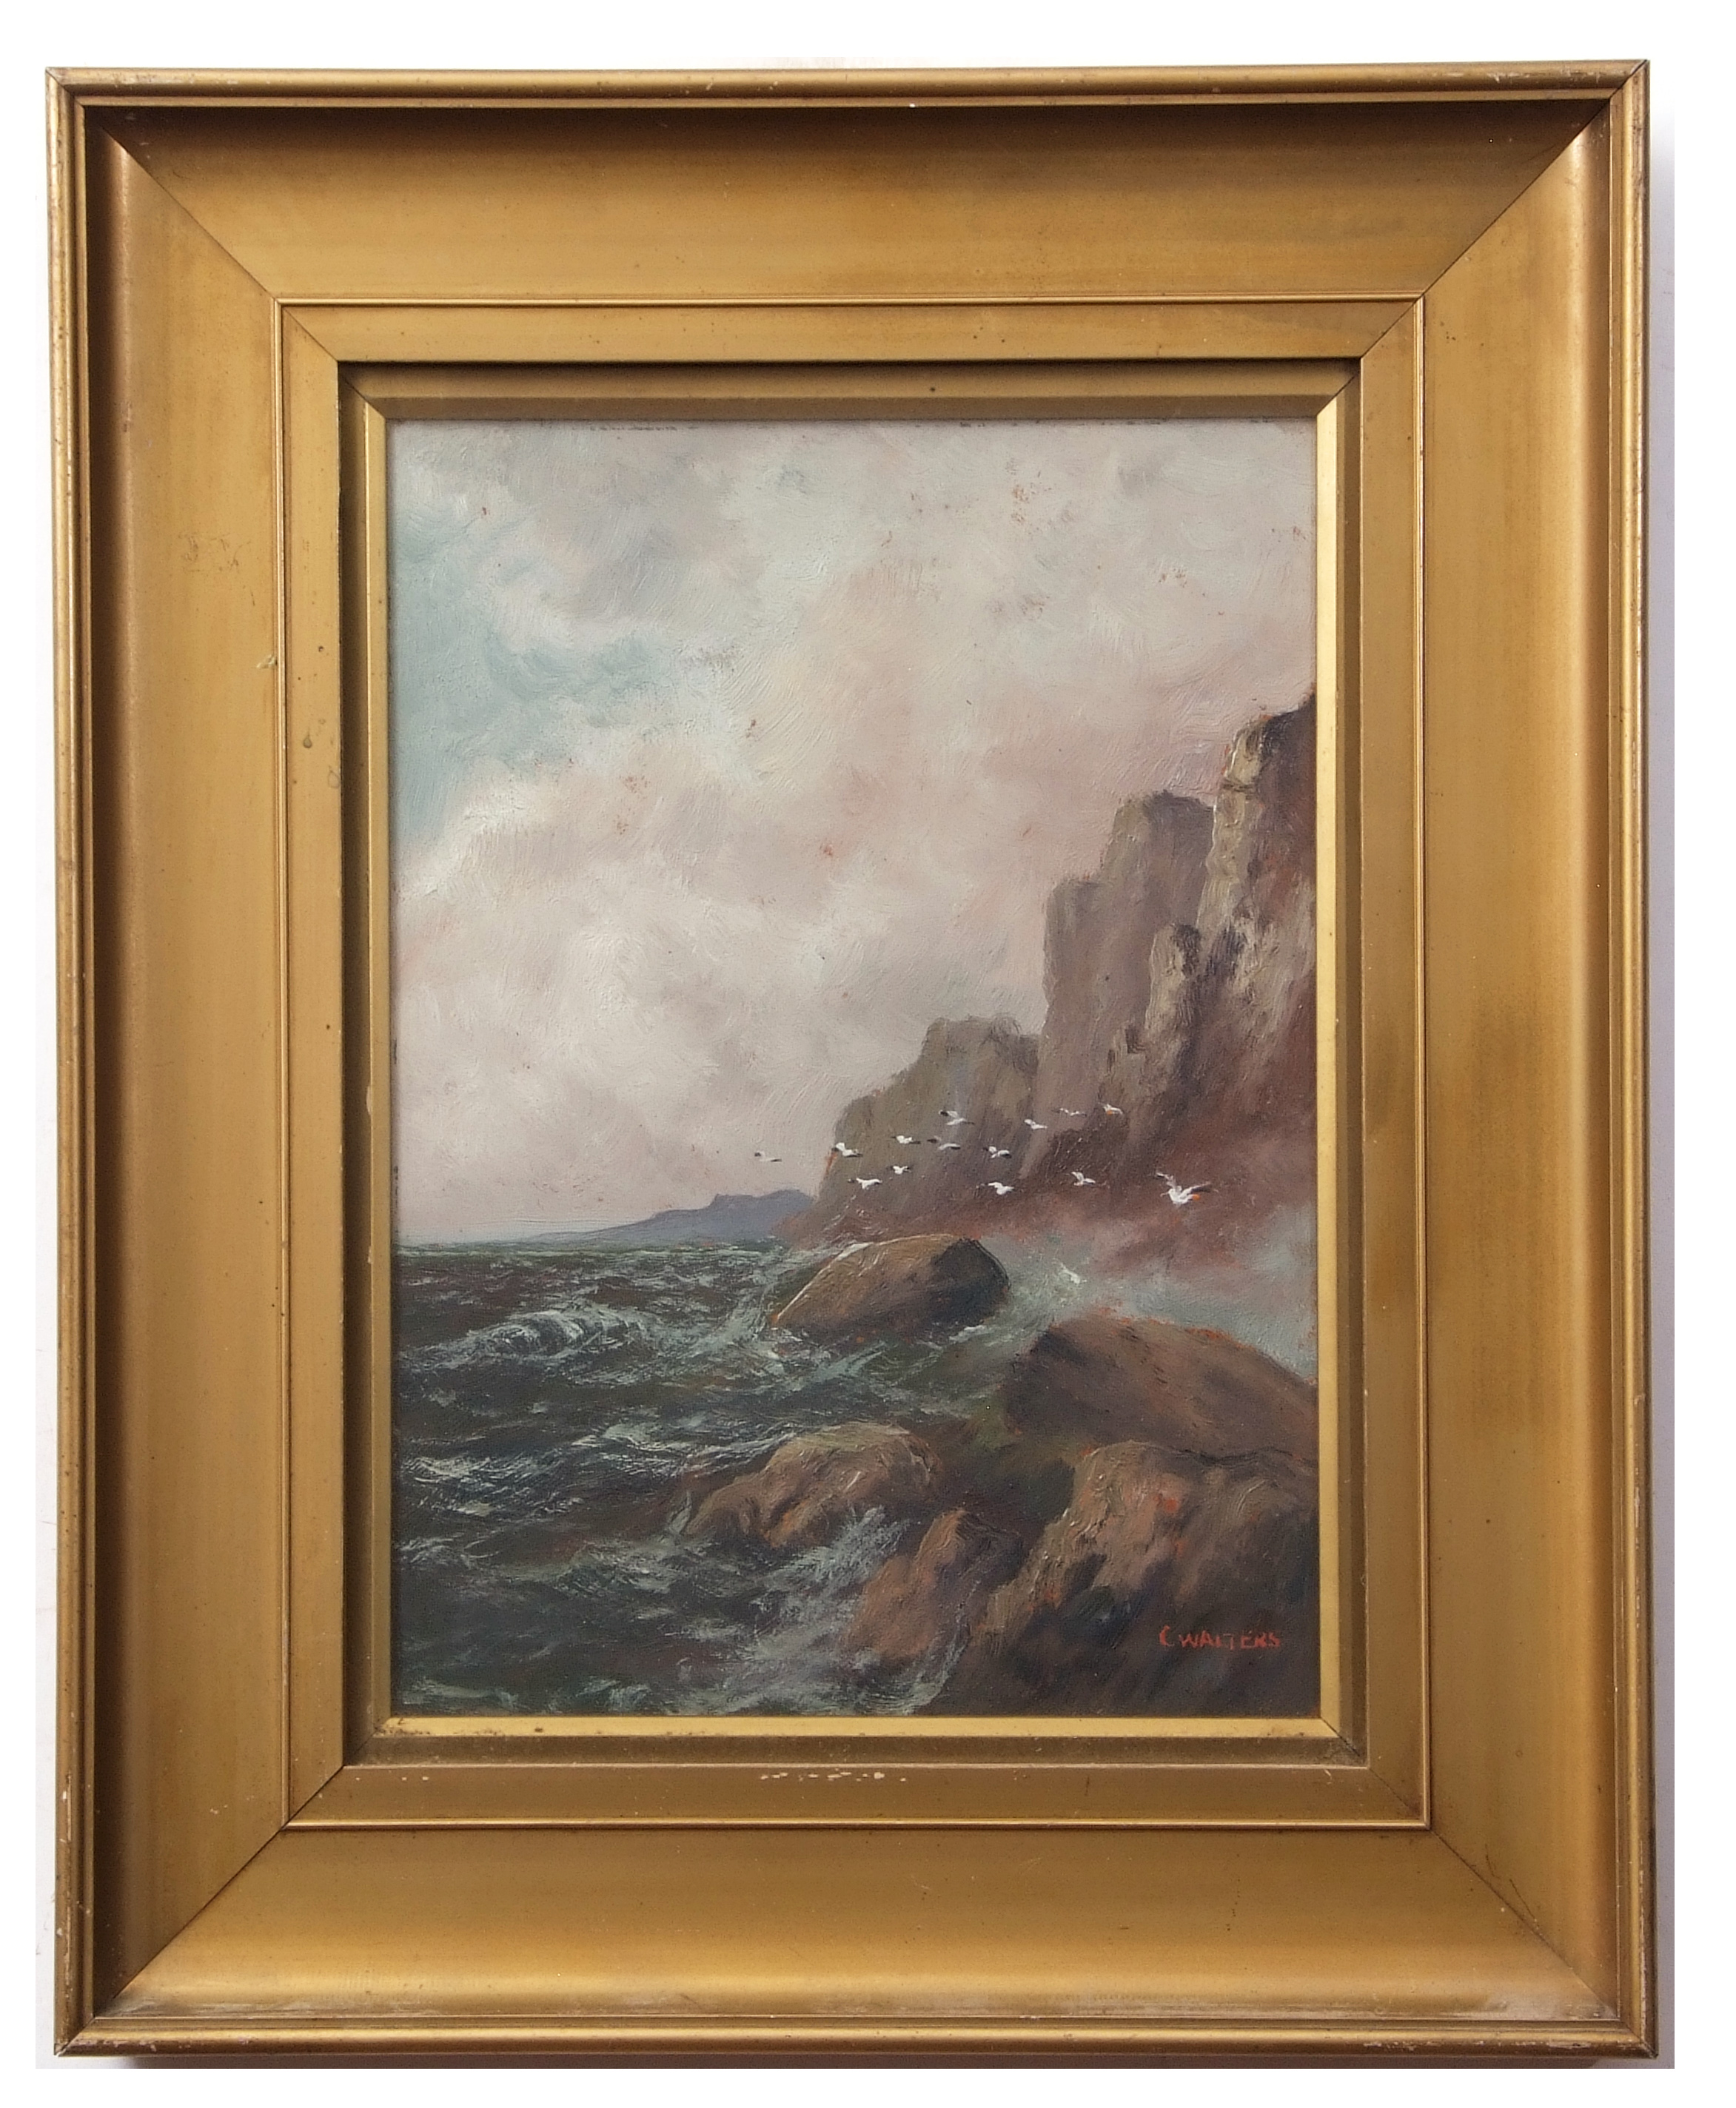 C Walters (19th/20th century), Coastal scene, oil on board, signed lower right, 34 x 24cm